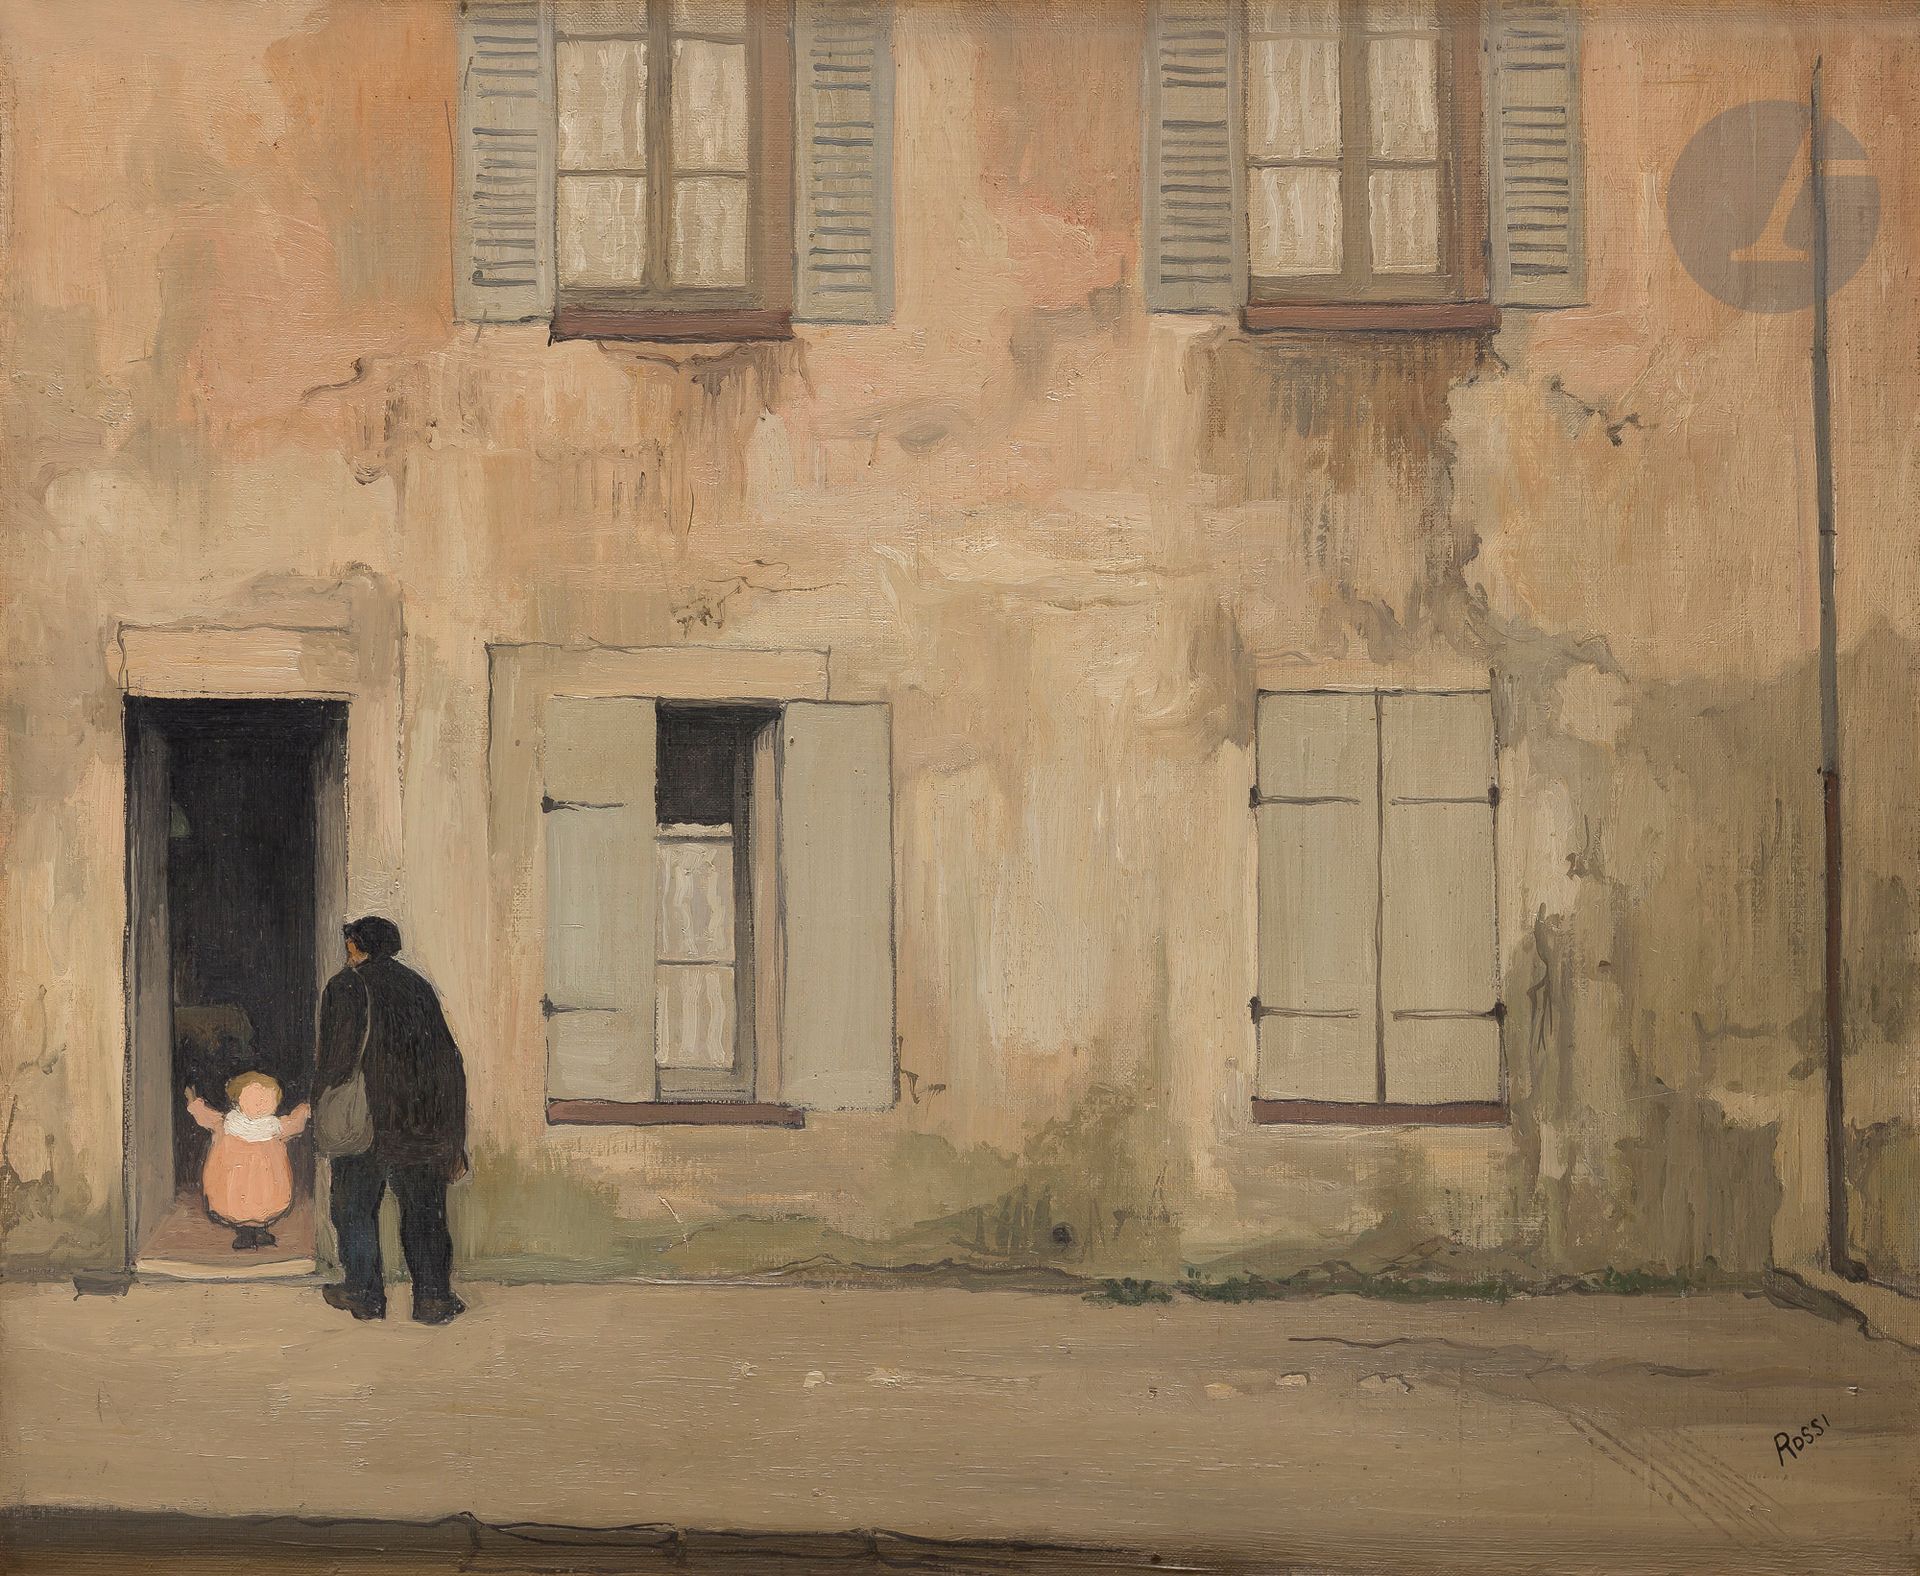 Null 约瑟夫-罗西（1892-1930）
父亲回家》，1929 年
布面油画。
右下方有签名。
50 x 61 厘米

出处 ： 
Courtille 收藏&hellip;